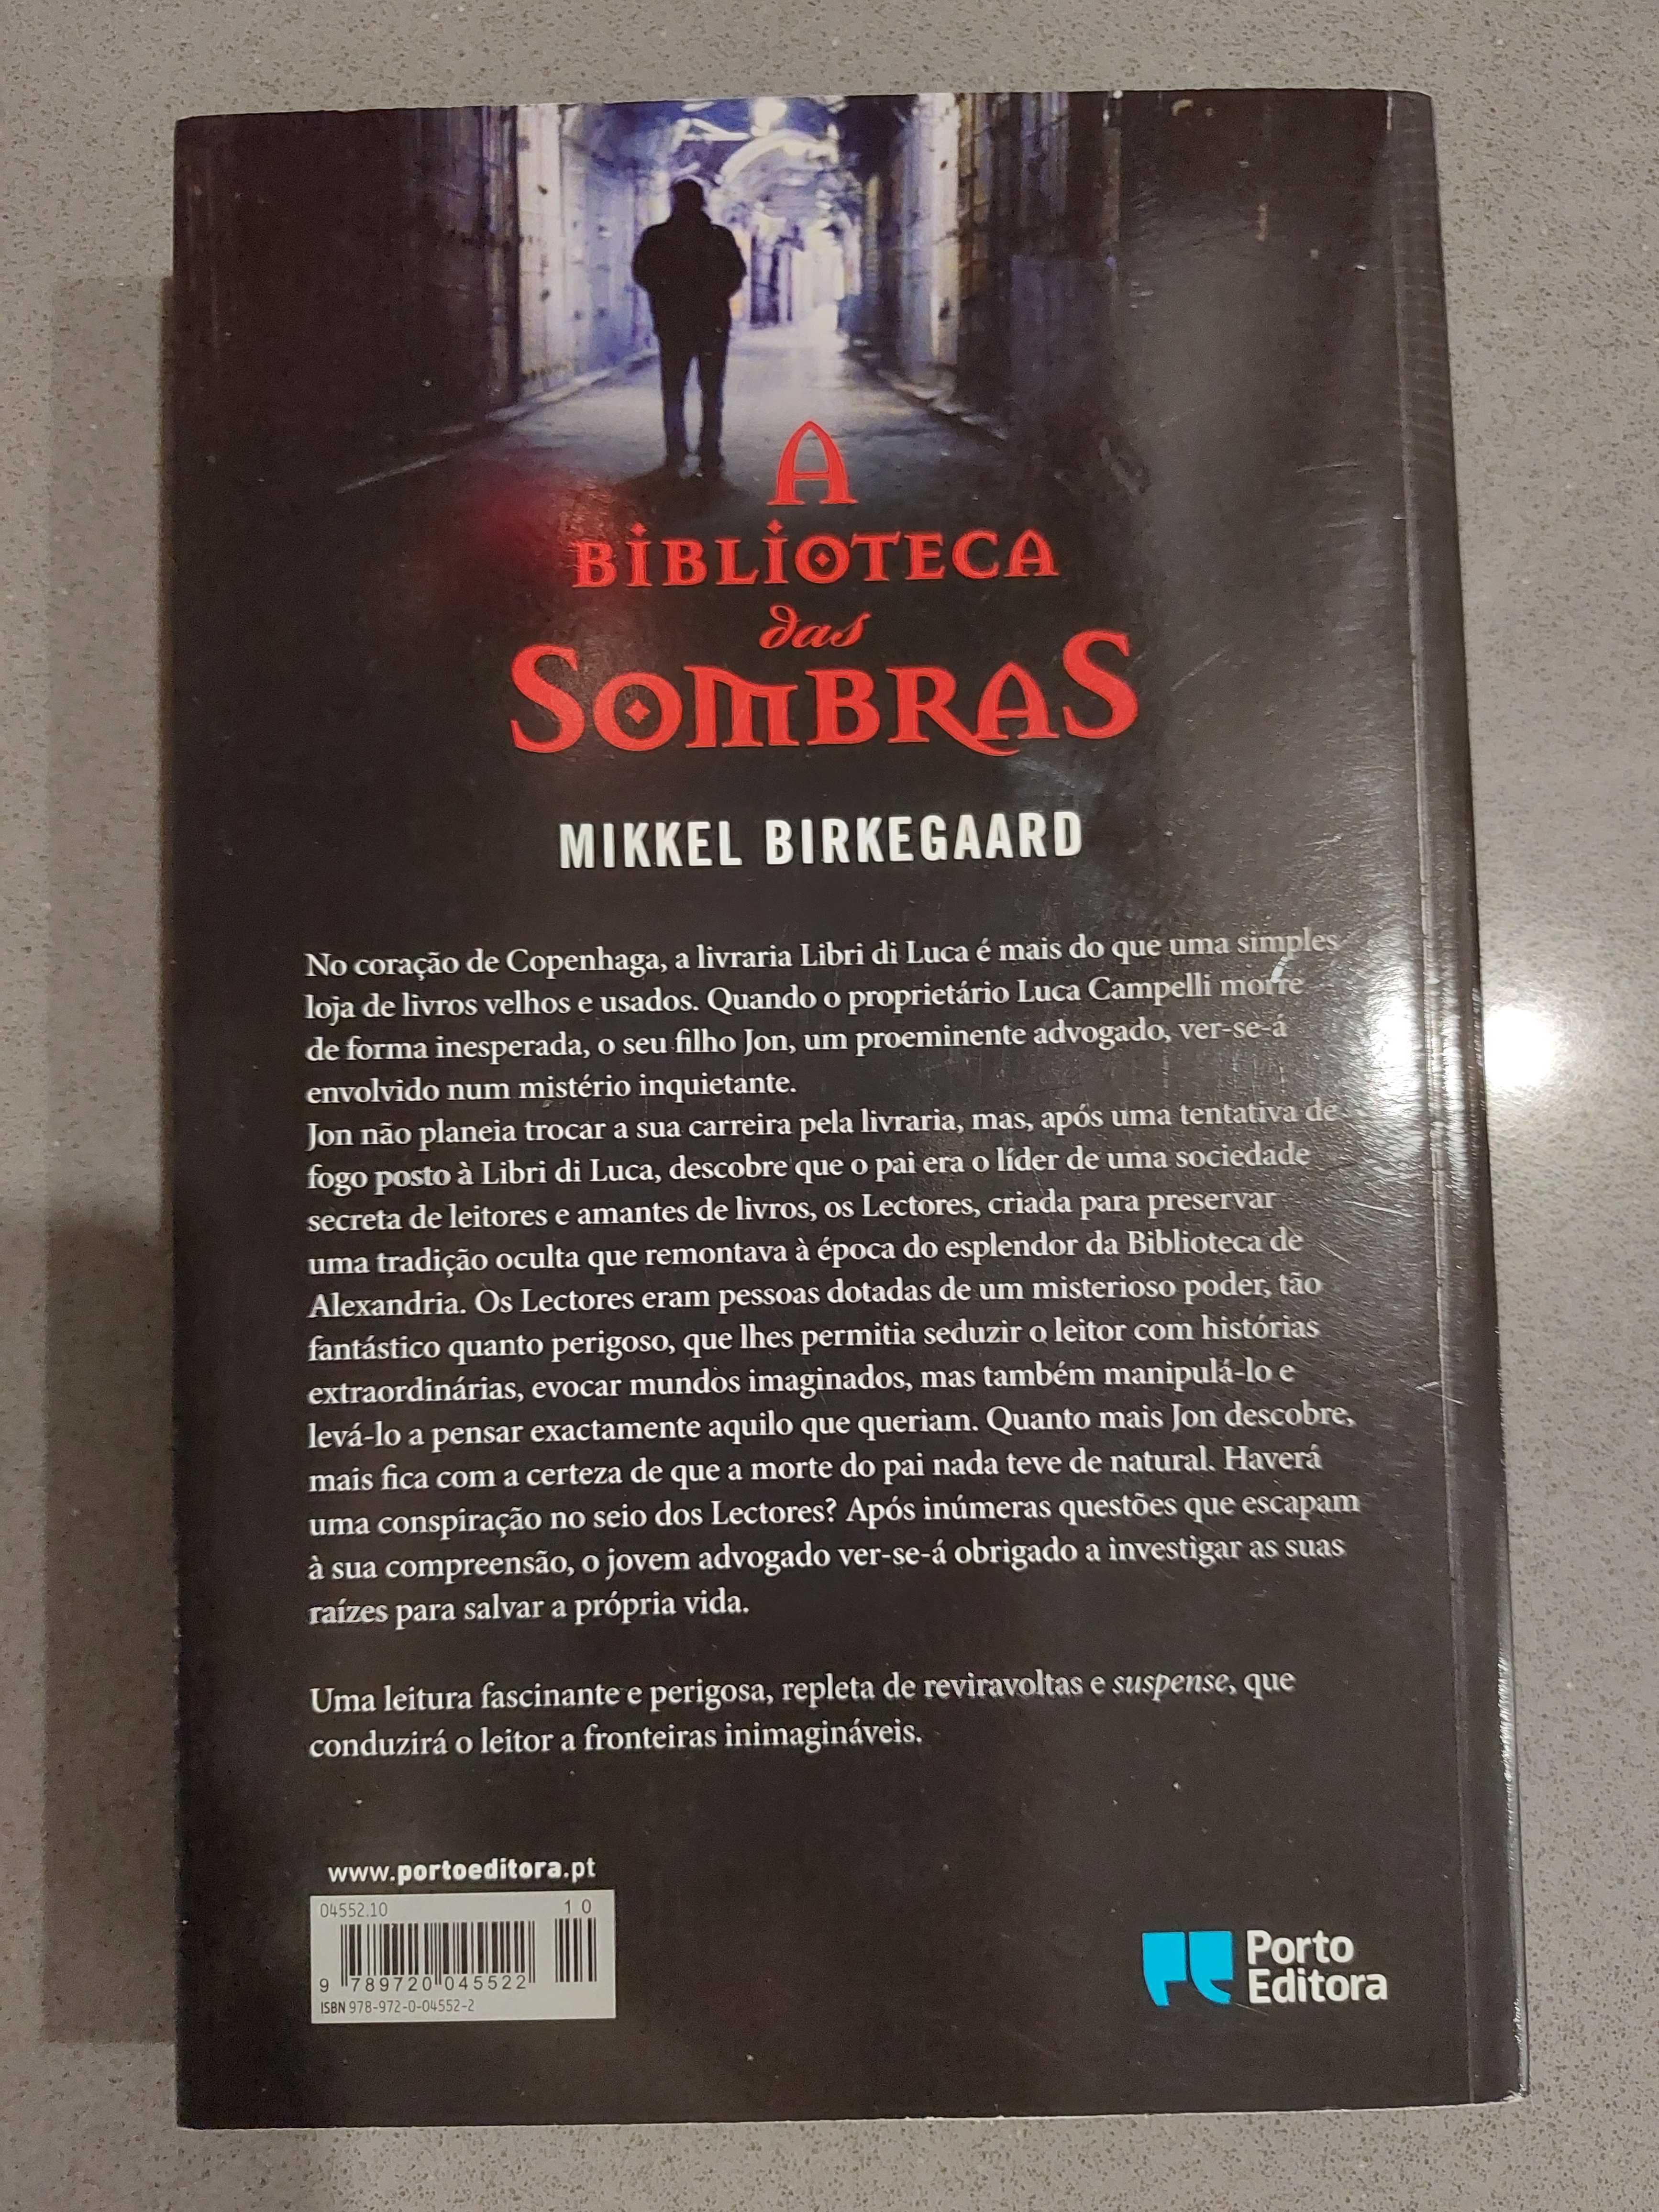 Mikkel Birkegaard - A Biblioteca das Sombras (PORTES GRATIS)